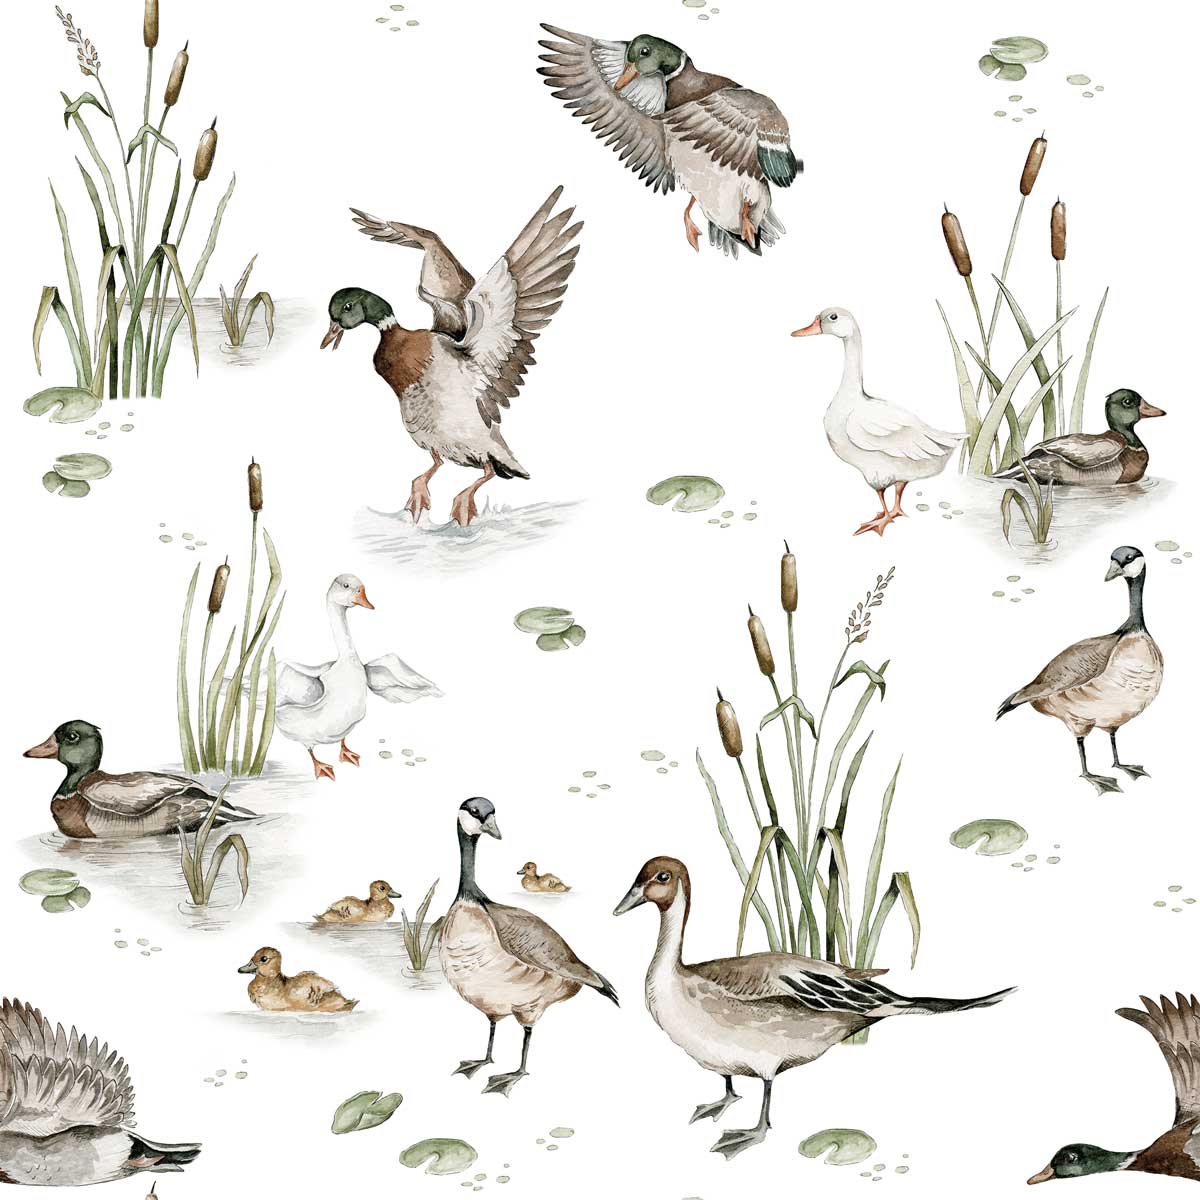 Ducks Lake Wallpaper / Return To Innocence.com Wallstickers And Wallpaper Online Store